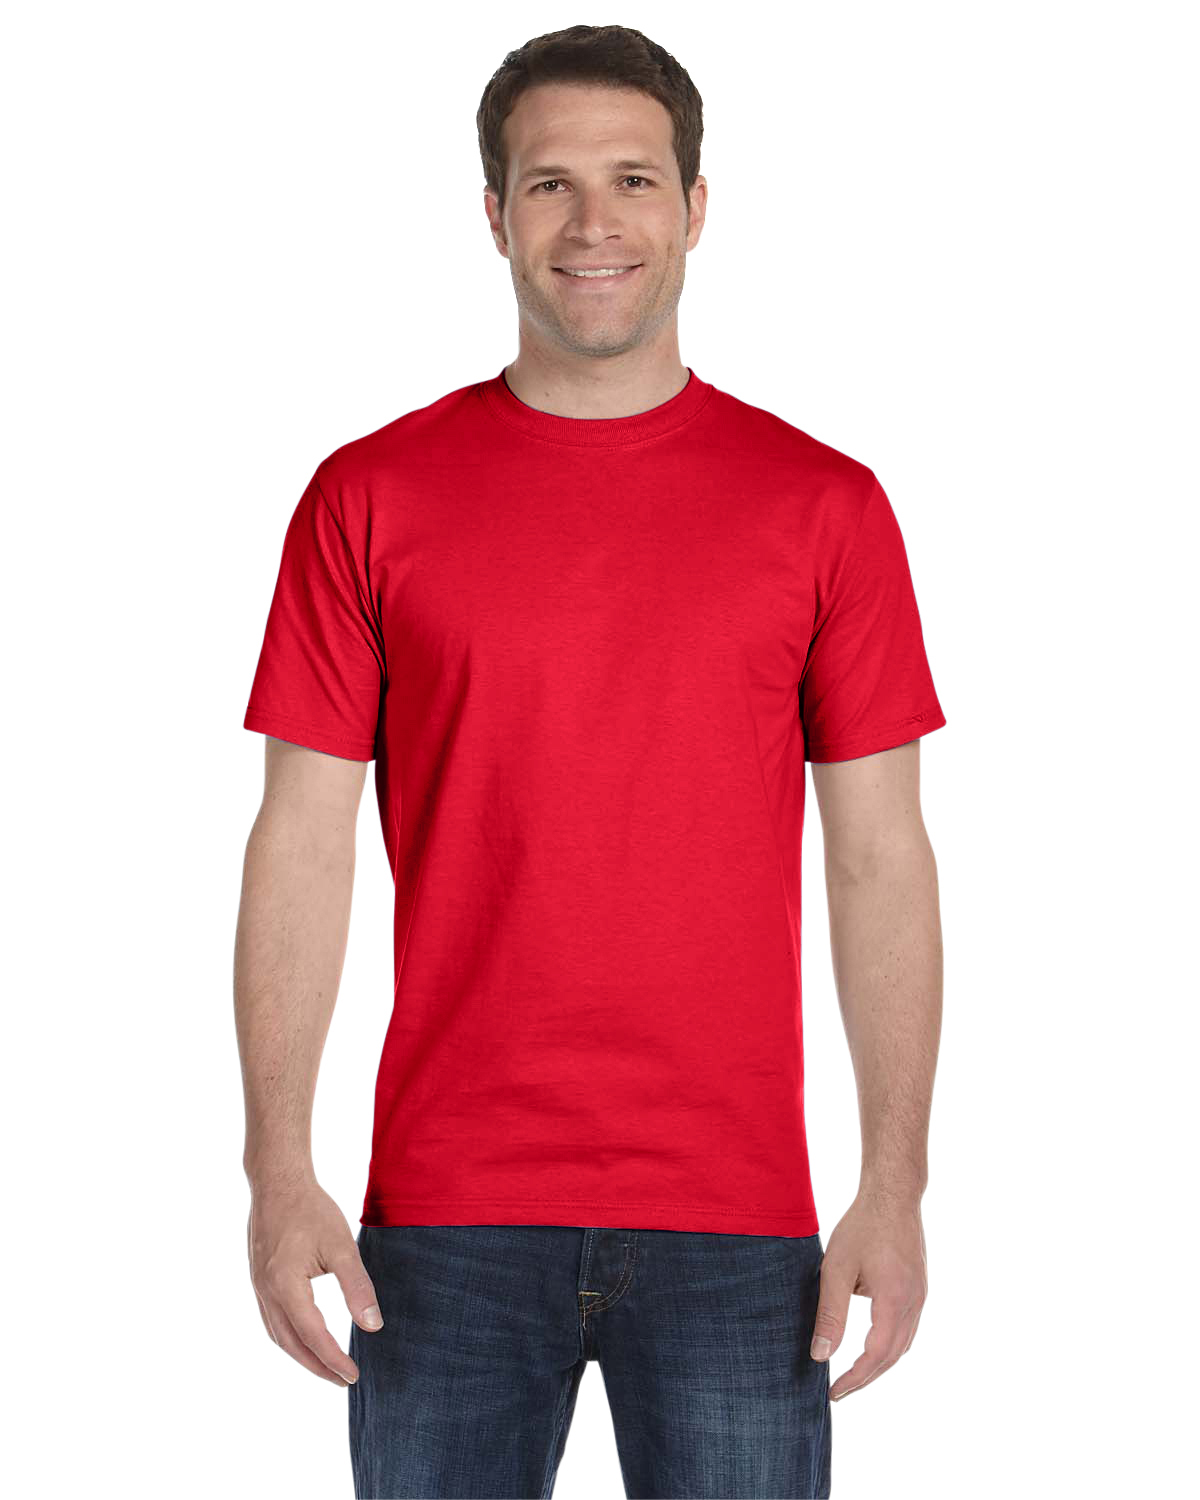 XL 5.2 oz 5280 Cotton T-Shirt Orange 